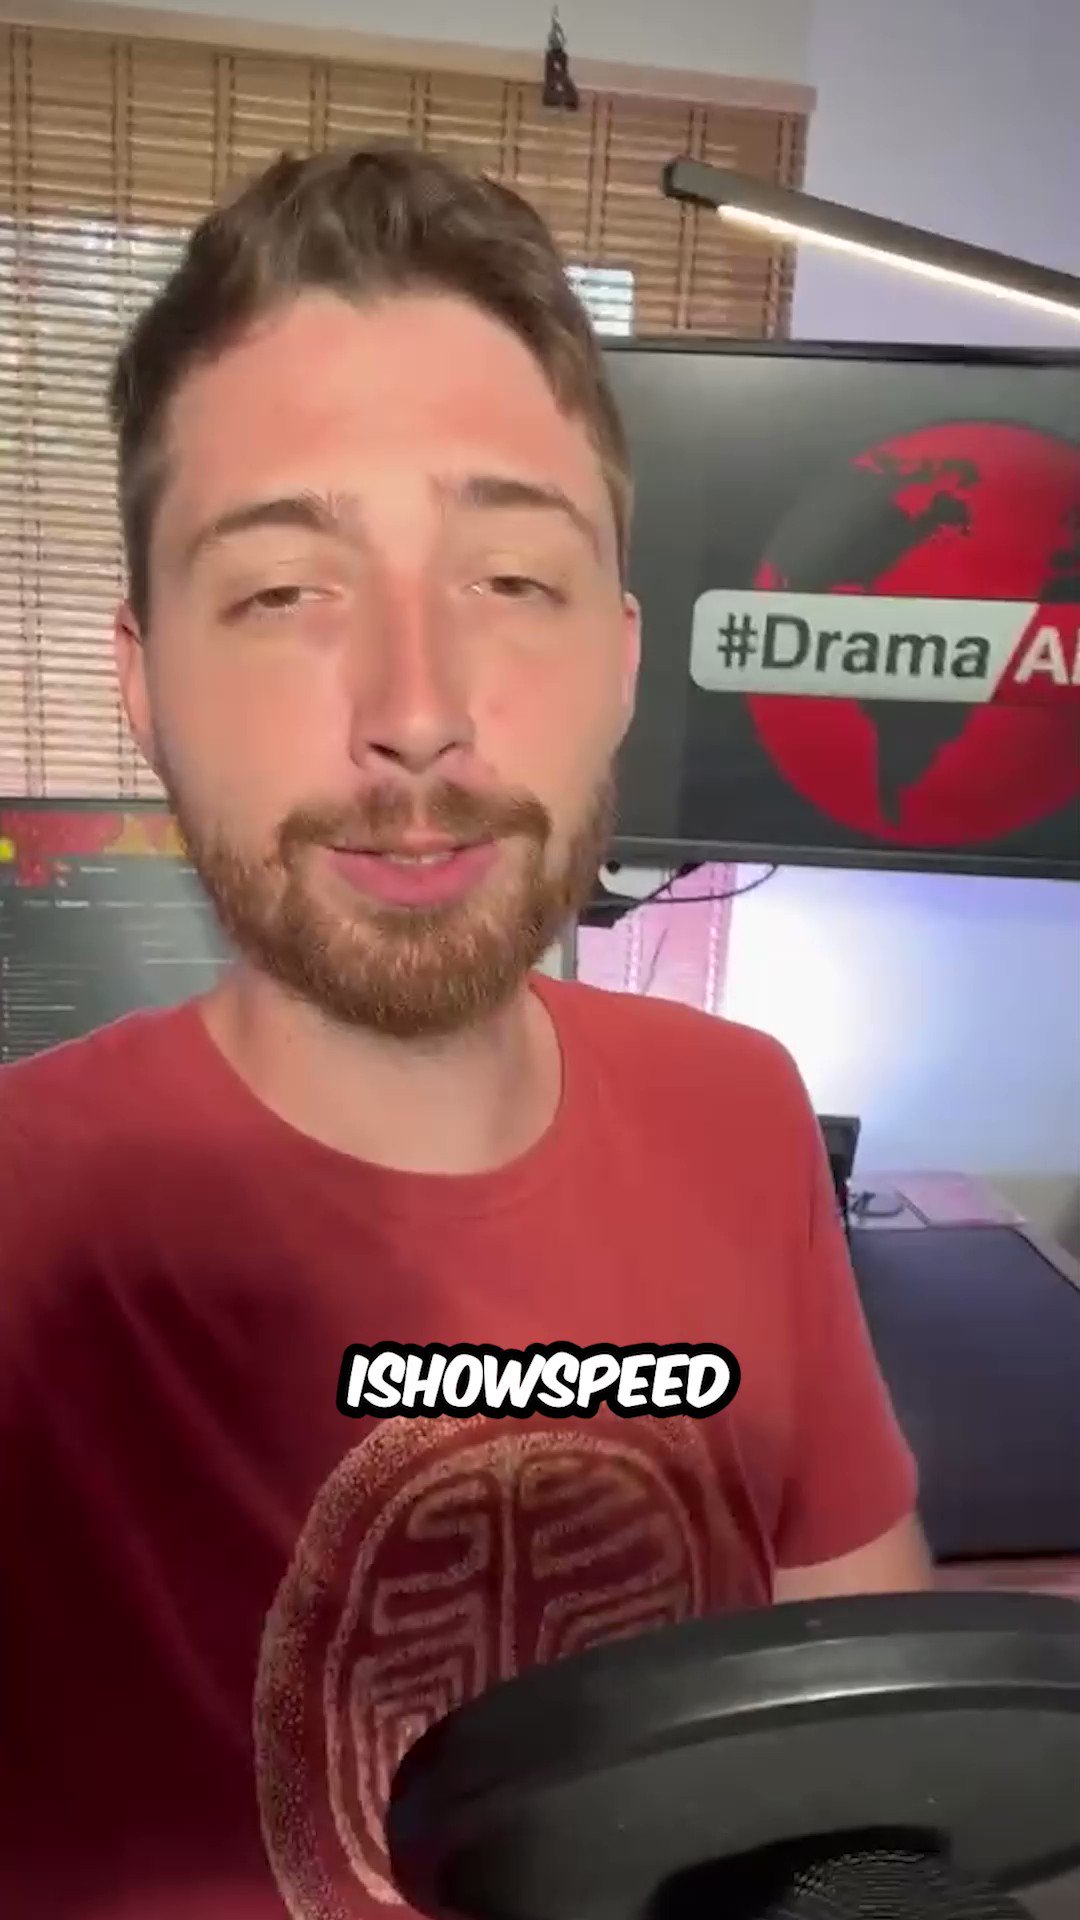 DramaAlert on X: Why does IShowSpeed know the lyrics? 😂 #DramaAlert   / X